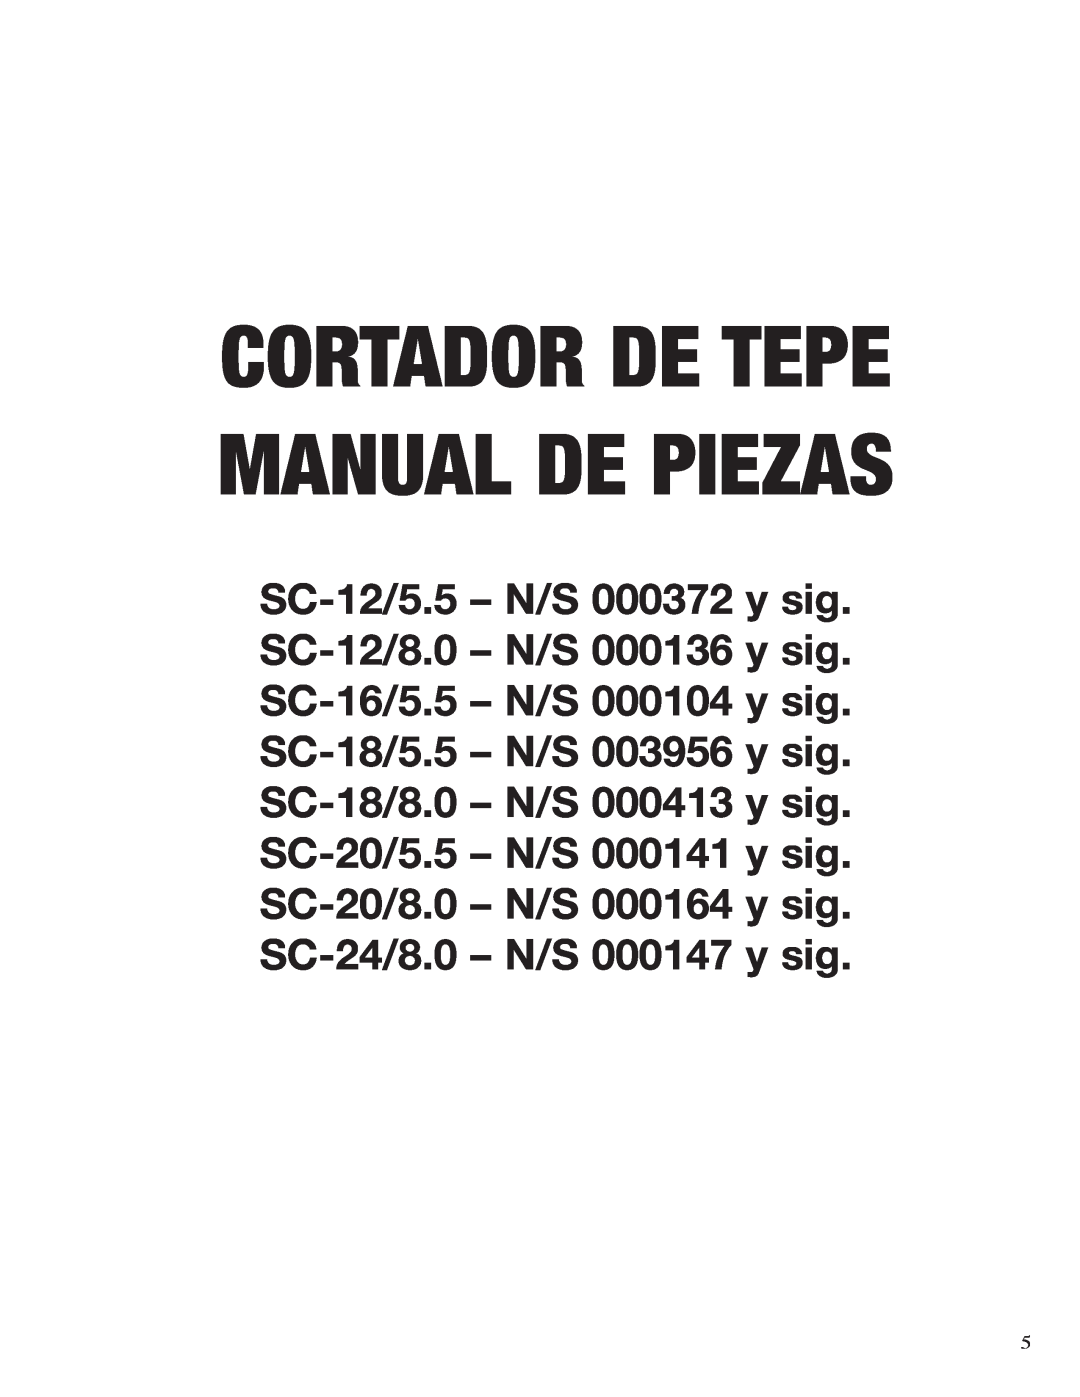 Classen SC-18, SC-24, SC-20, SC-16, SC-12 manual Cortador De Tepe Manual De Piezas 